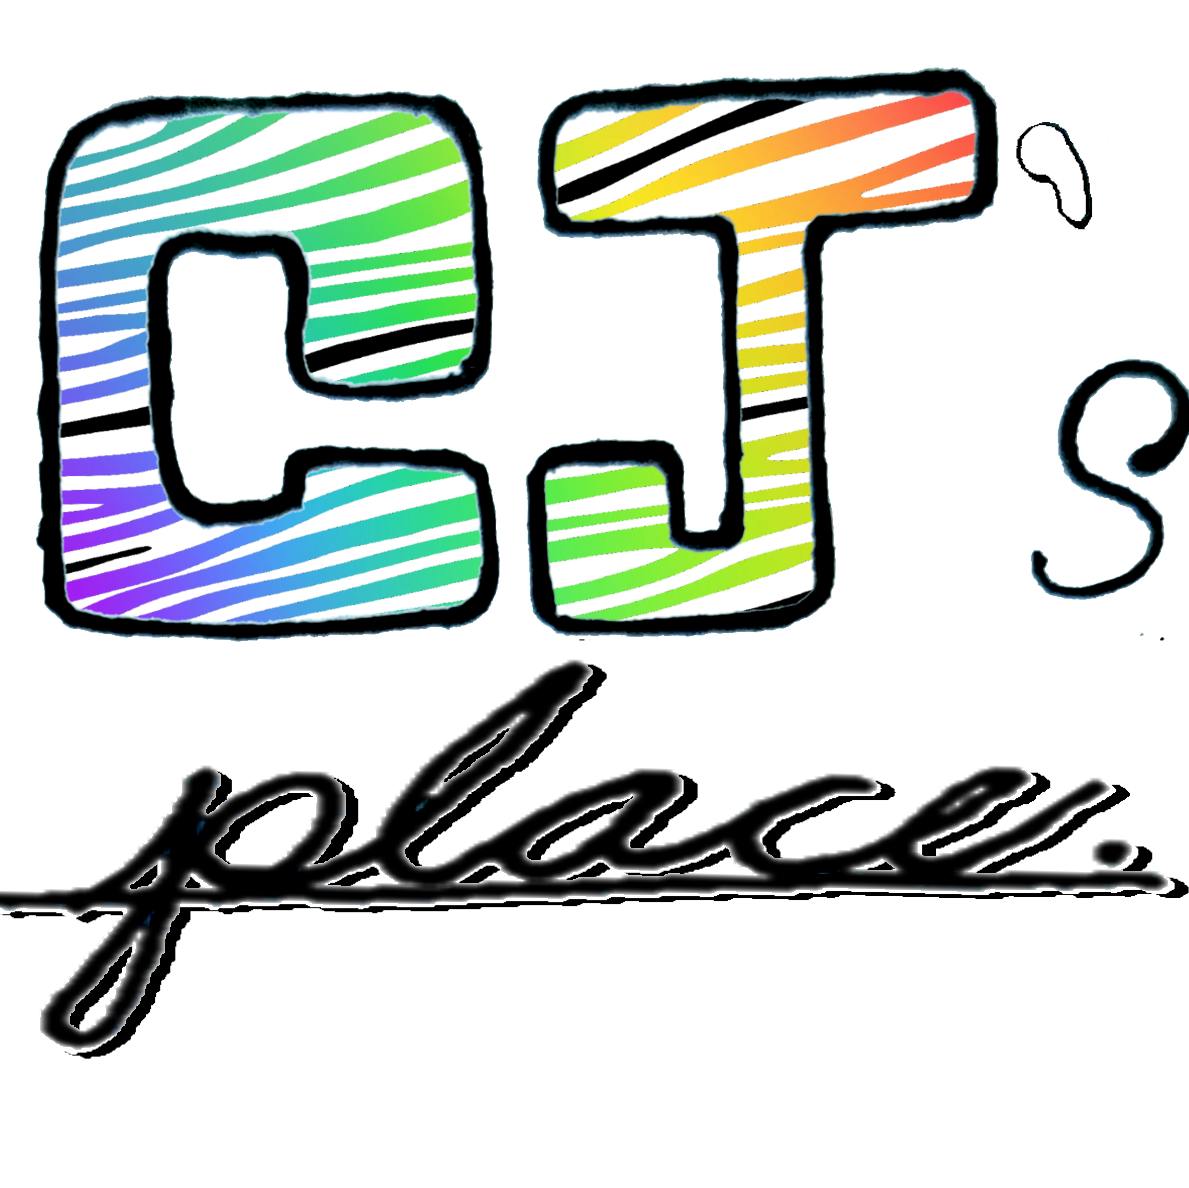 Cj's Place. logo